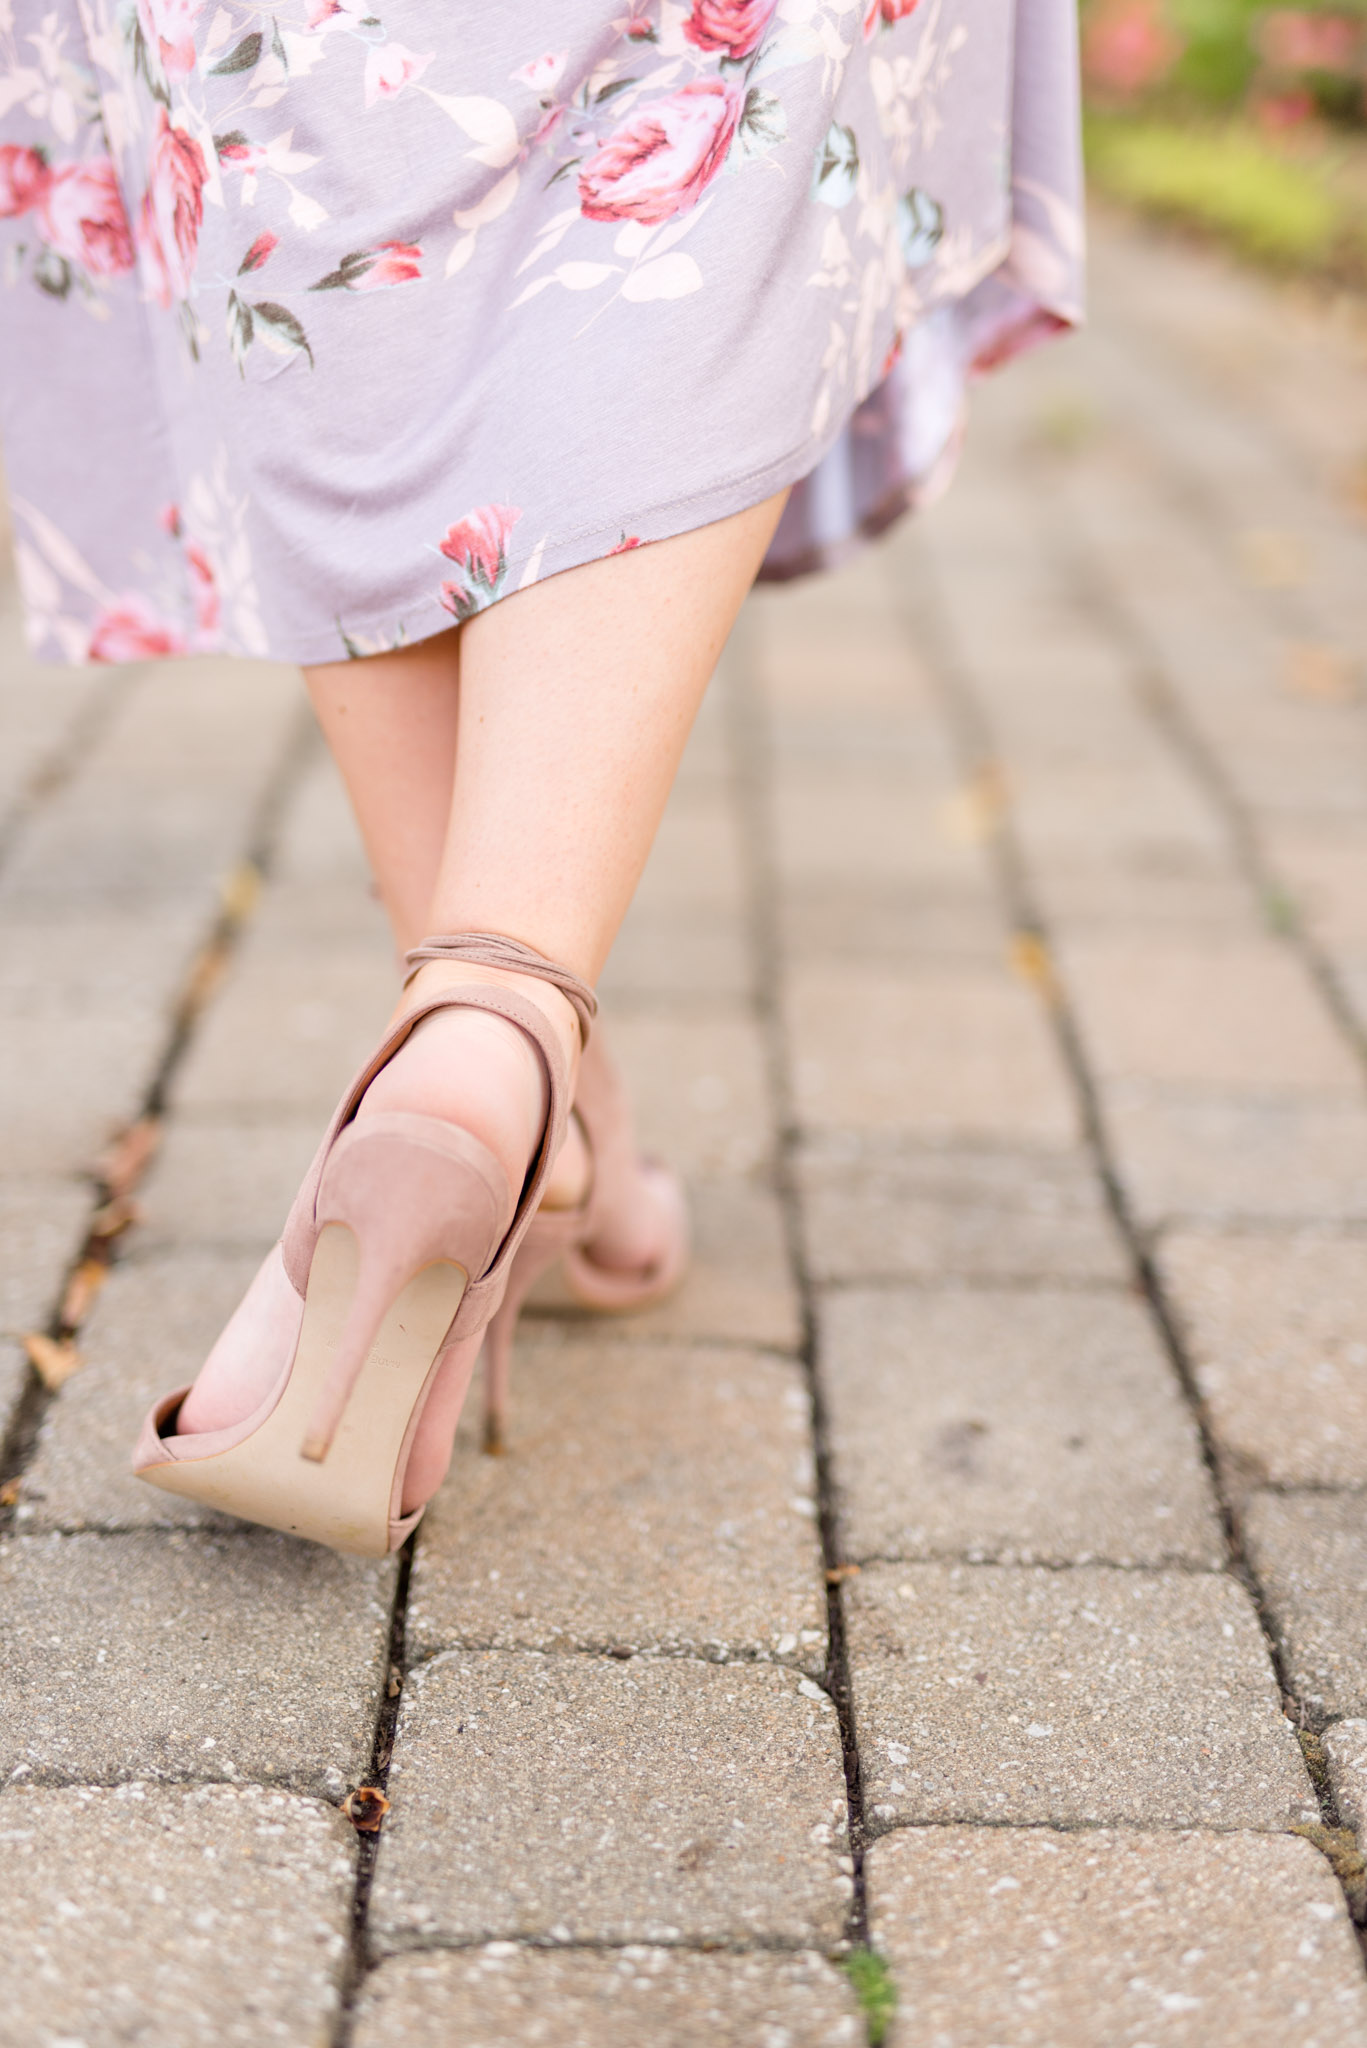 Girl wearing high heels walks along brick path.